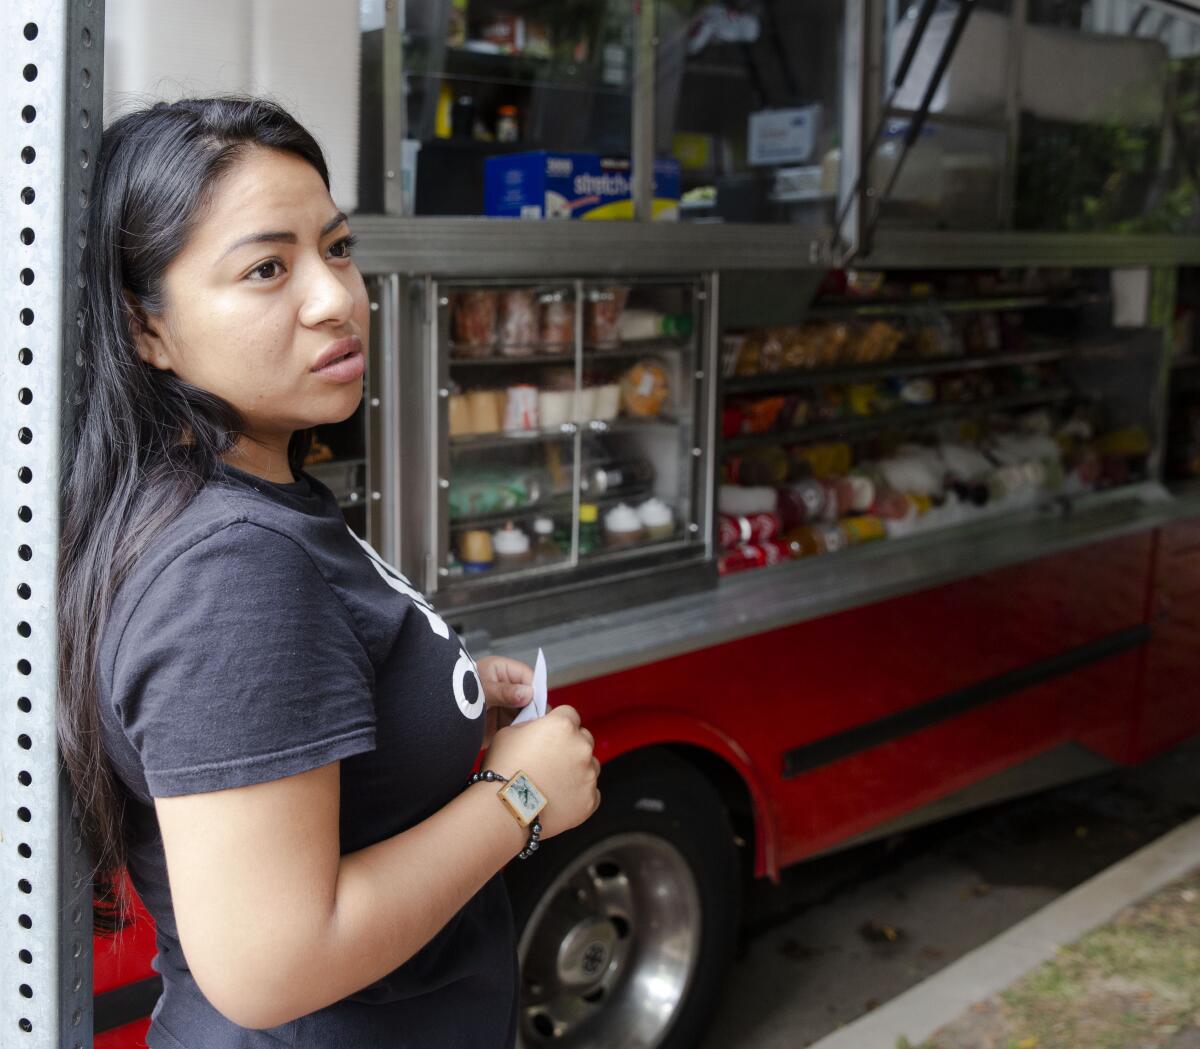 Lunch truck operator Jennifer Ramirez